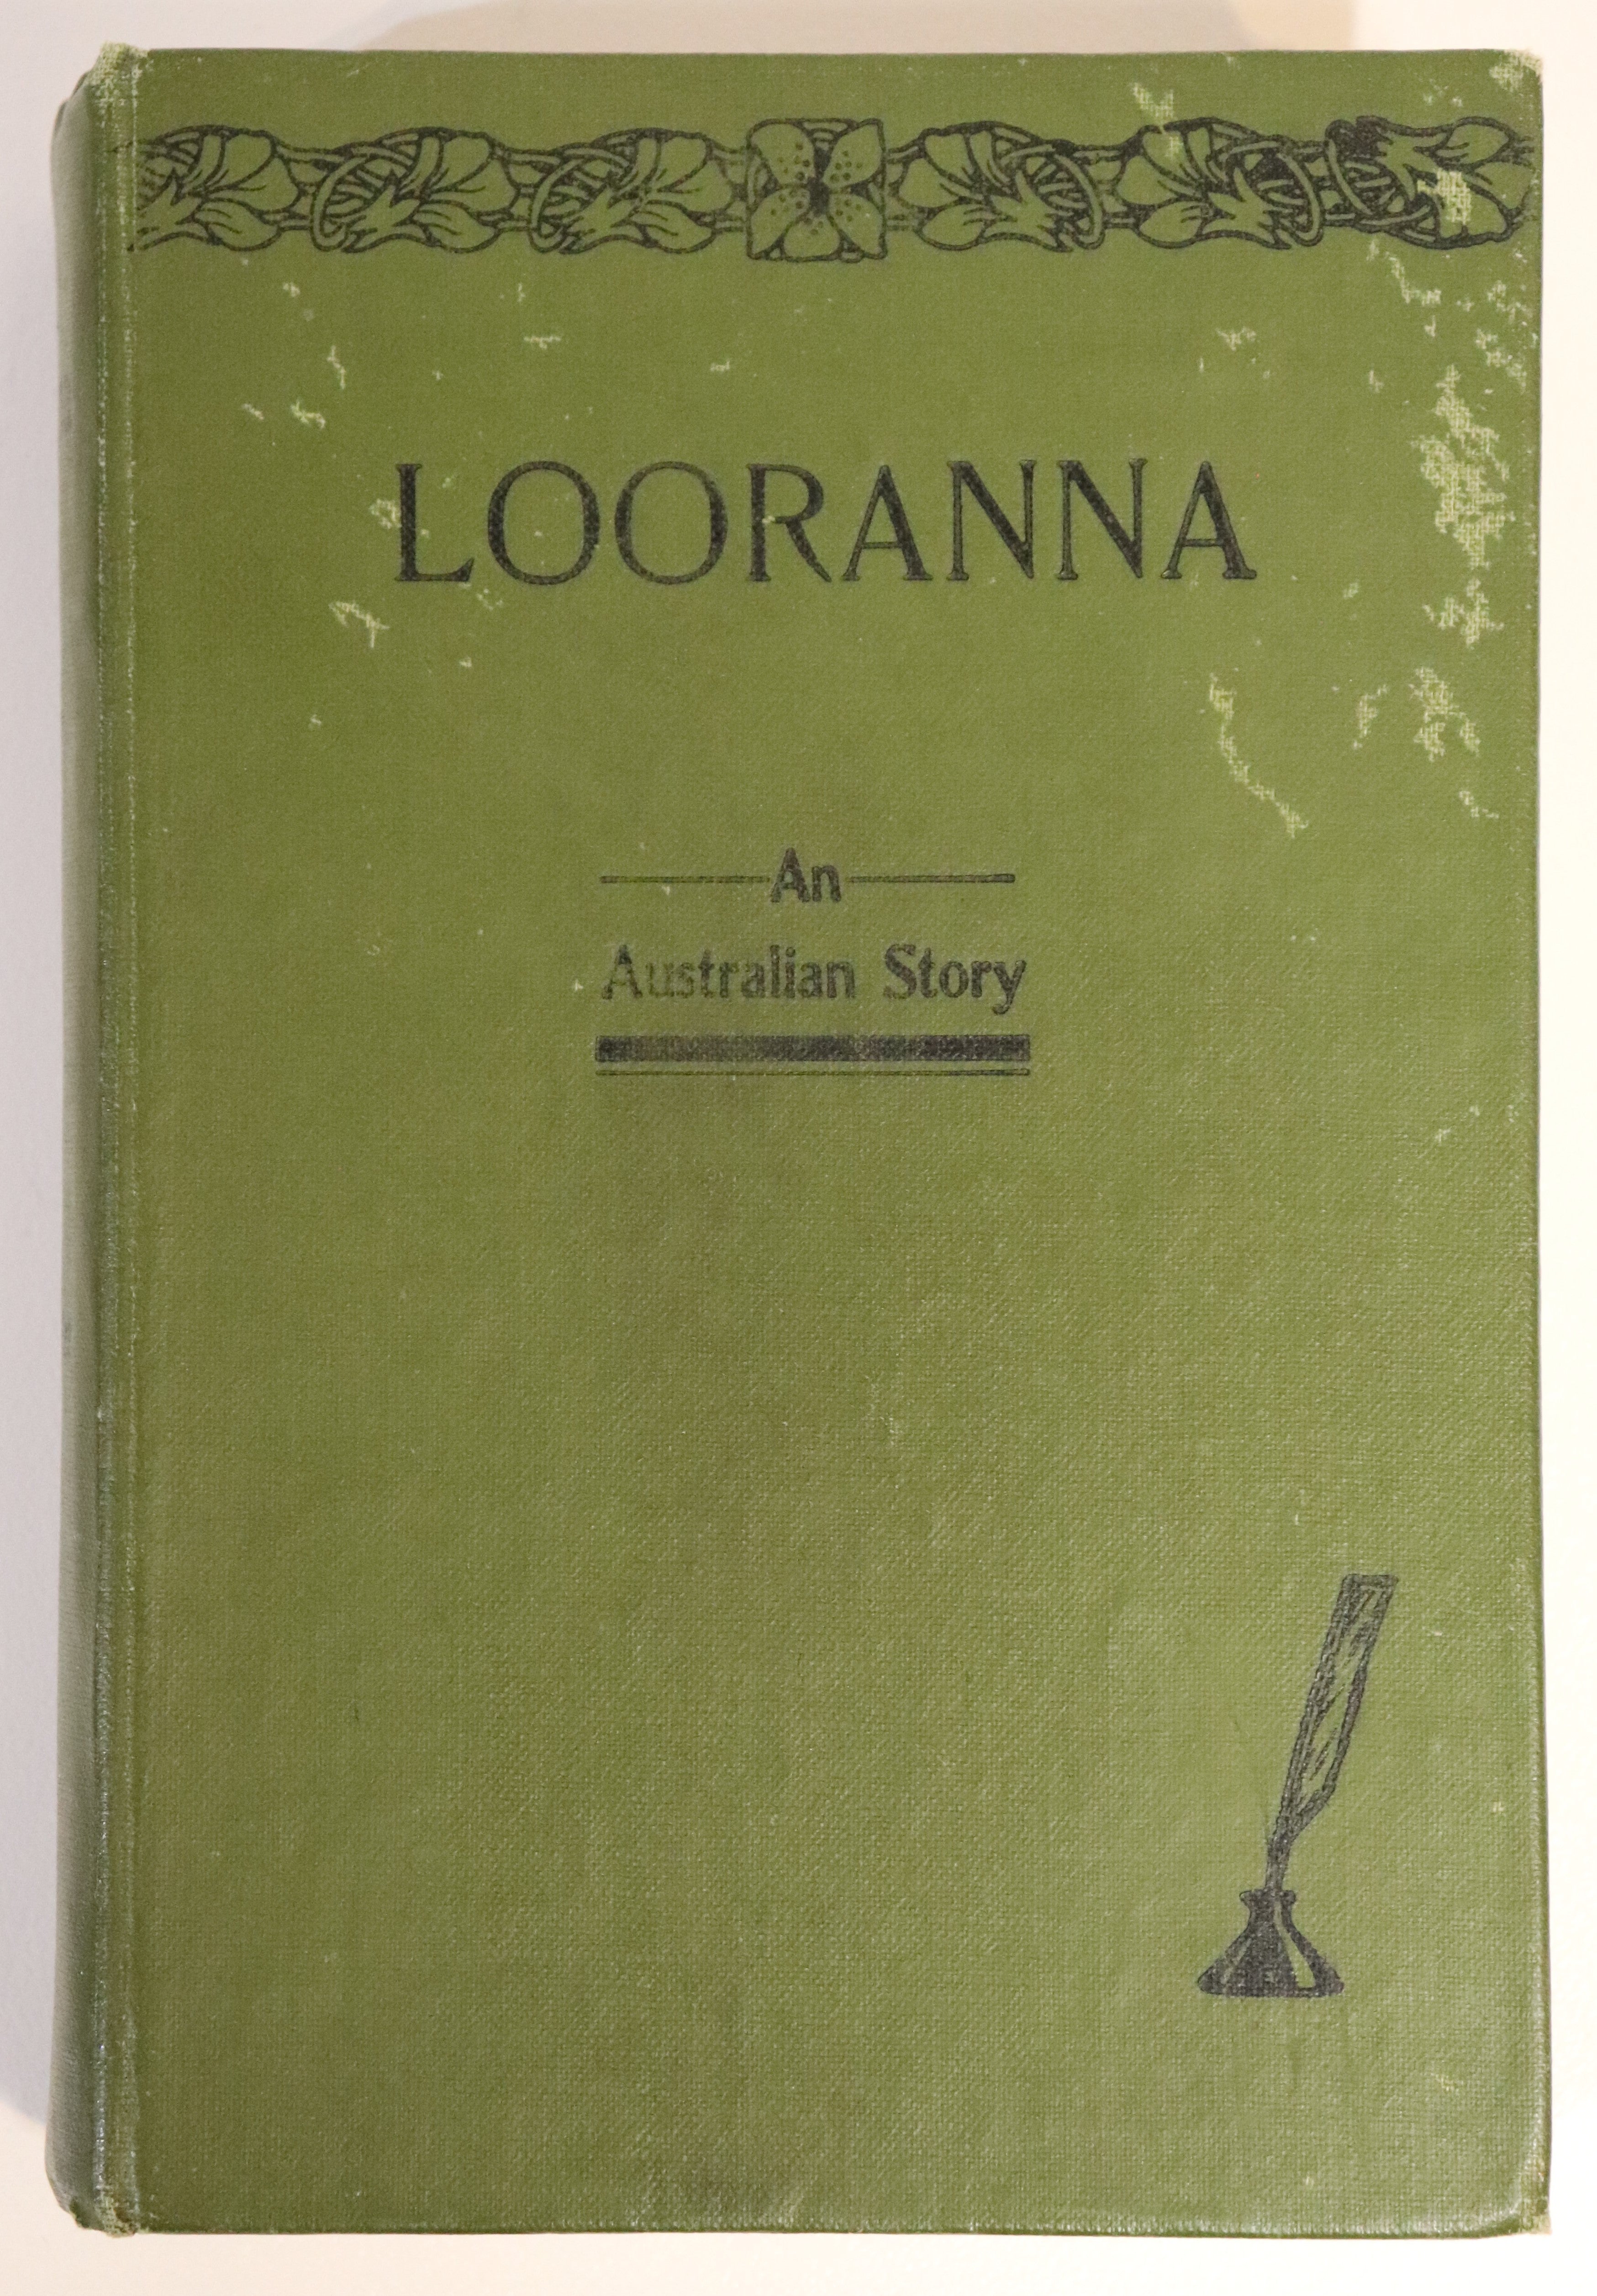 1908 Looranna: An Australian Story by M.A. McCarter Antique Fiction Book